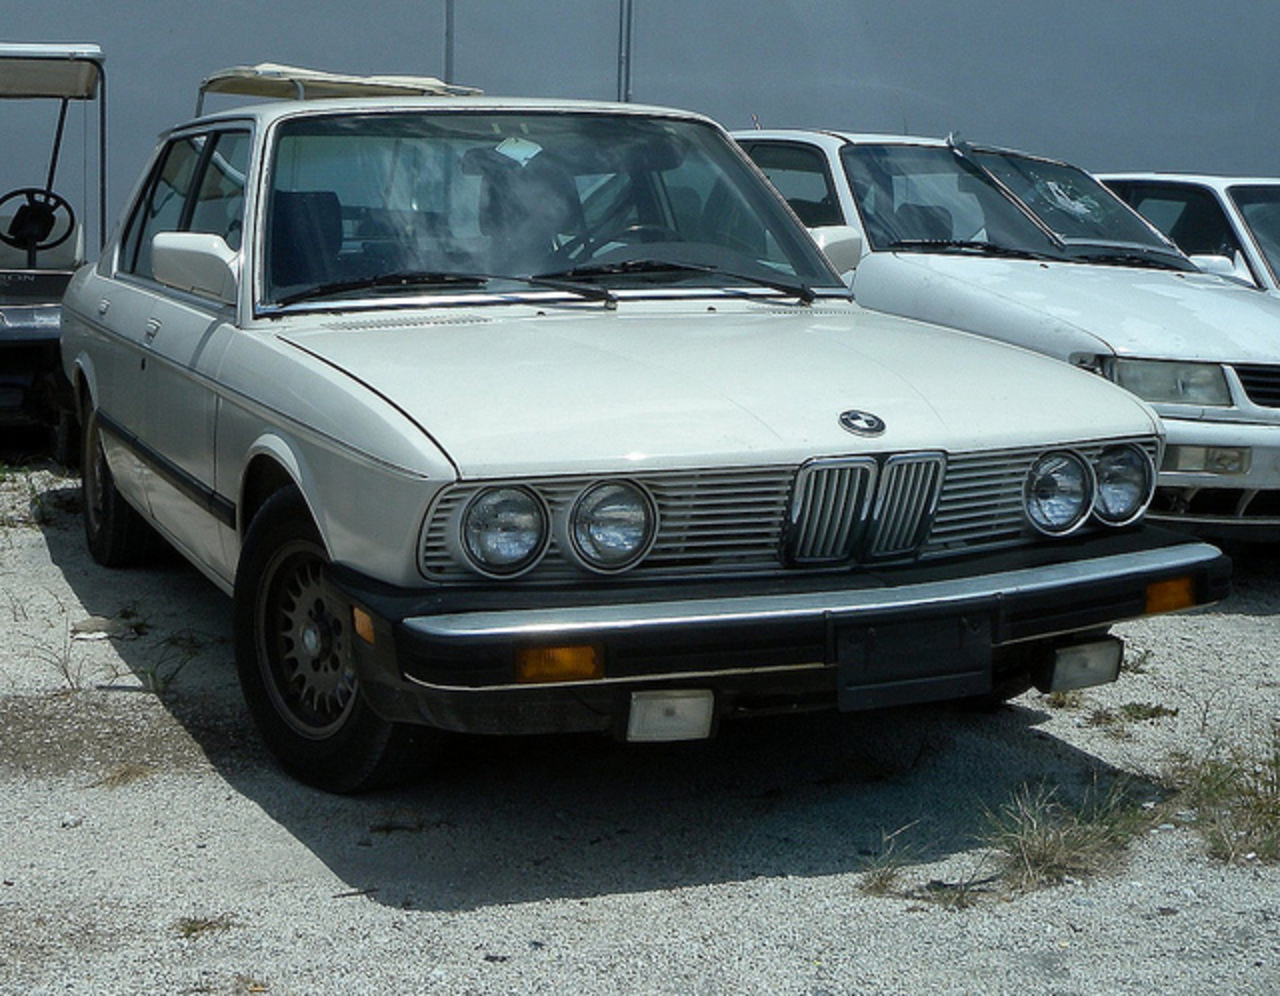 BMW 525i (E28) | Flickr - Photo Sharing!